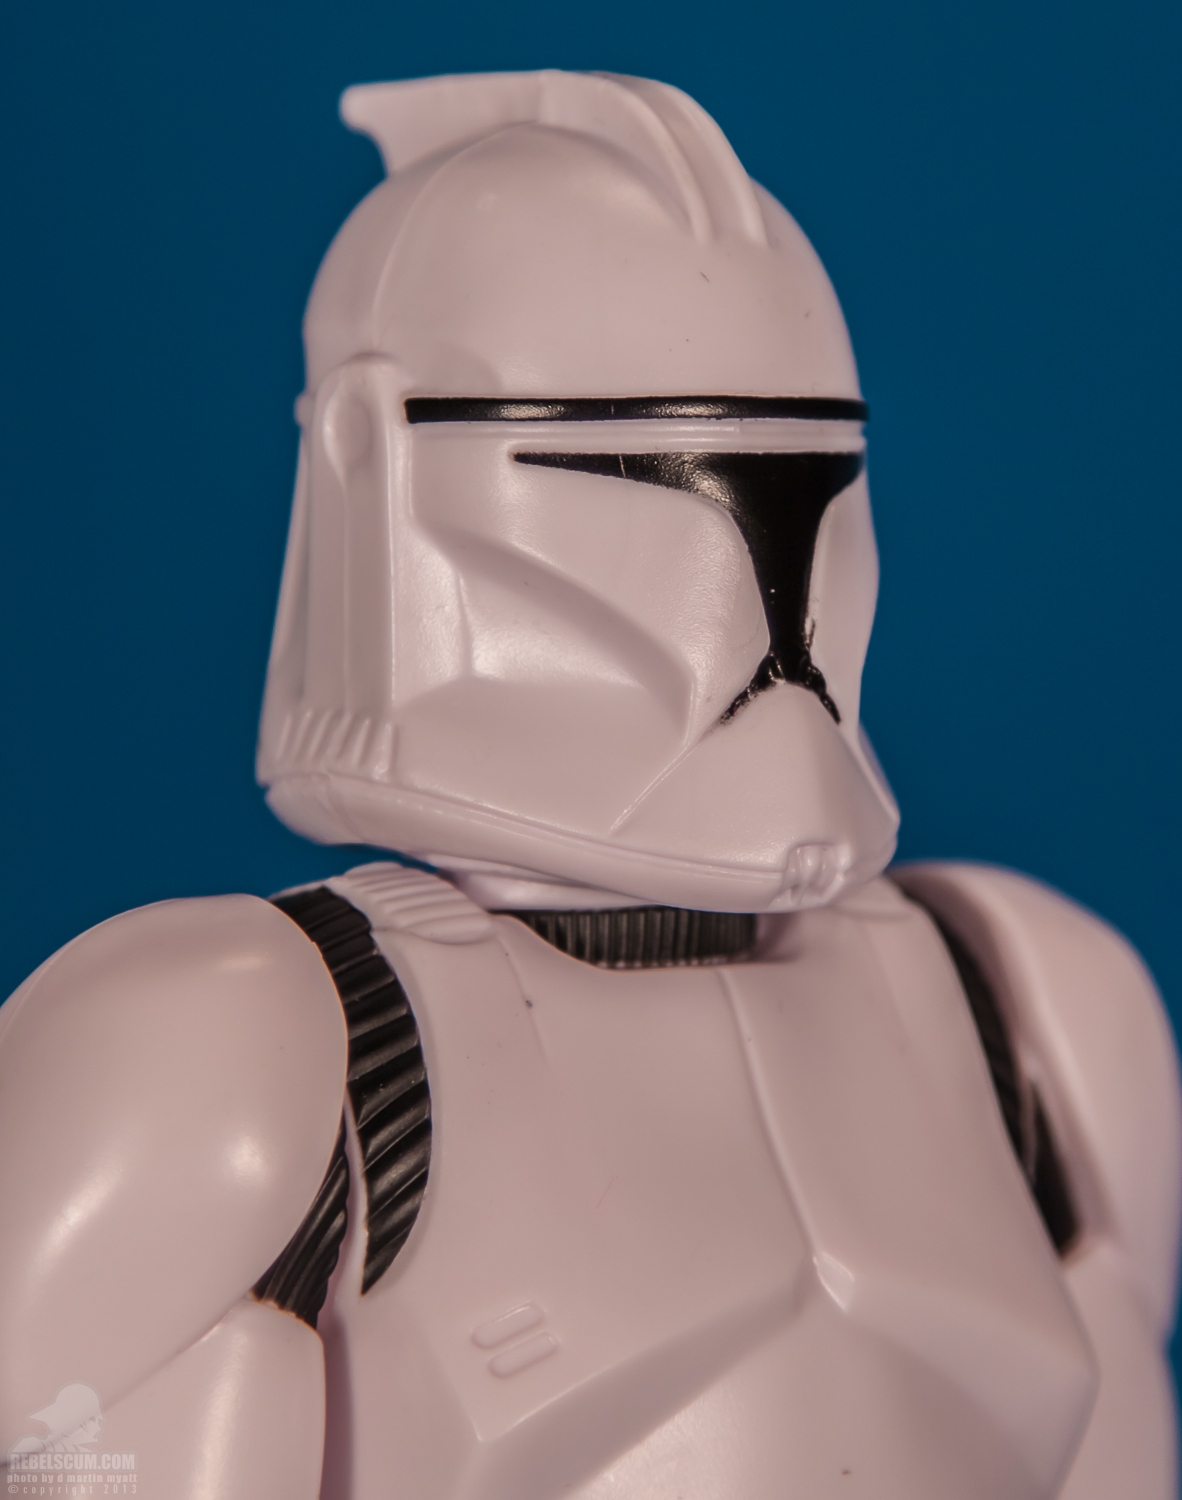 Clone_Trooper_Large_Size_Hasbro_Star_Wars-06.jpg